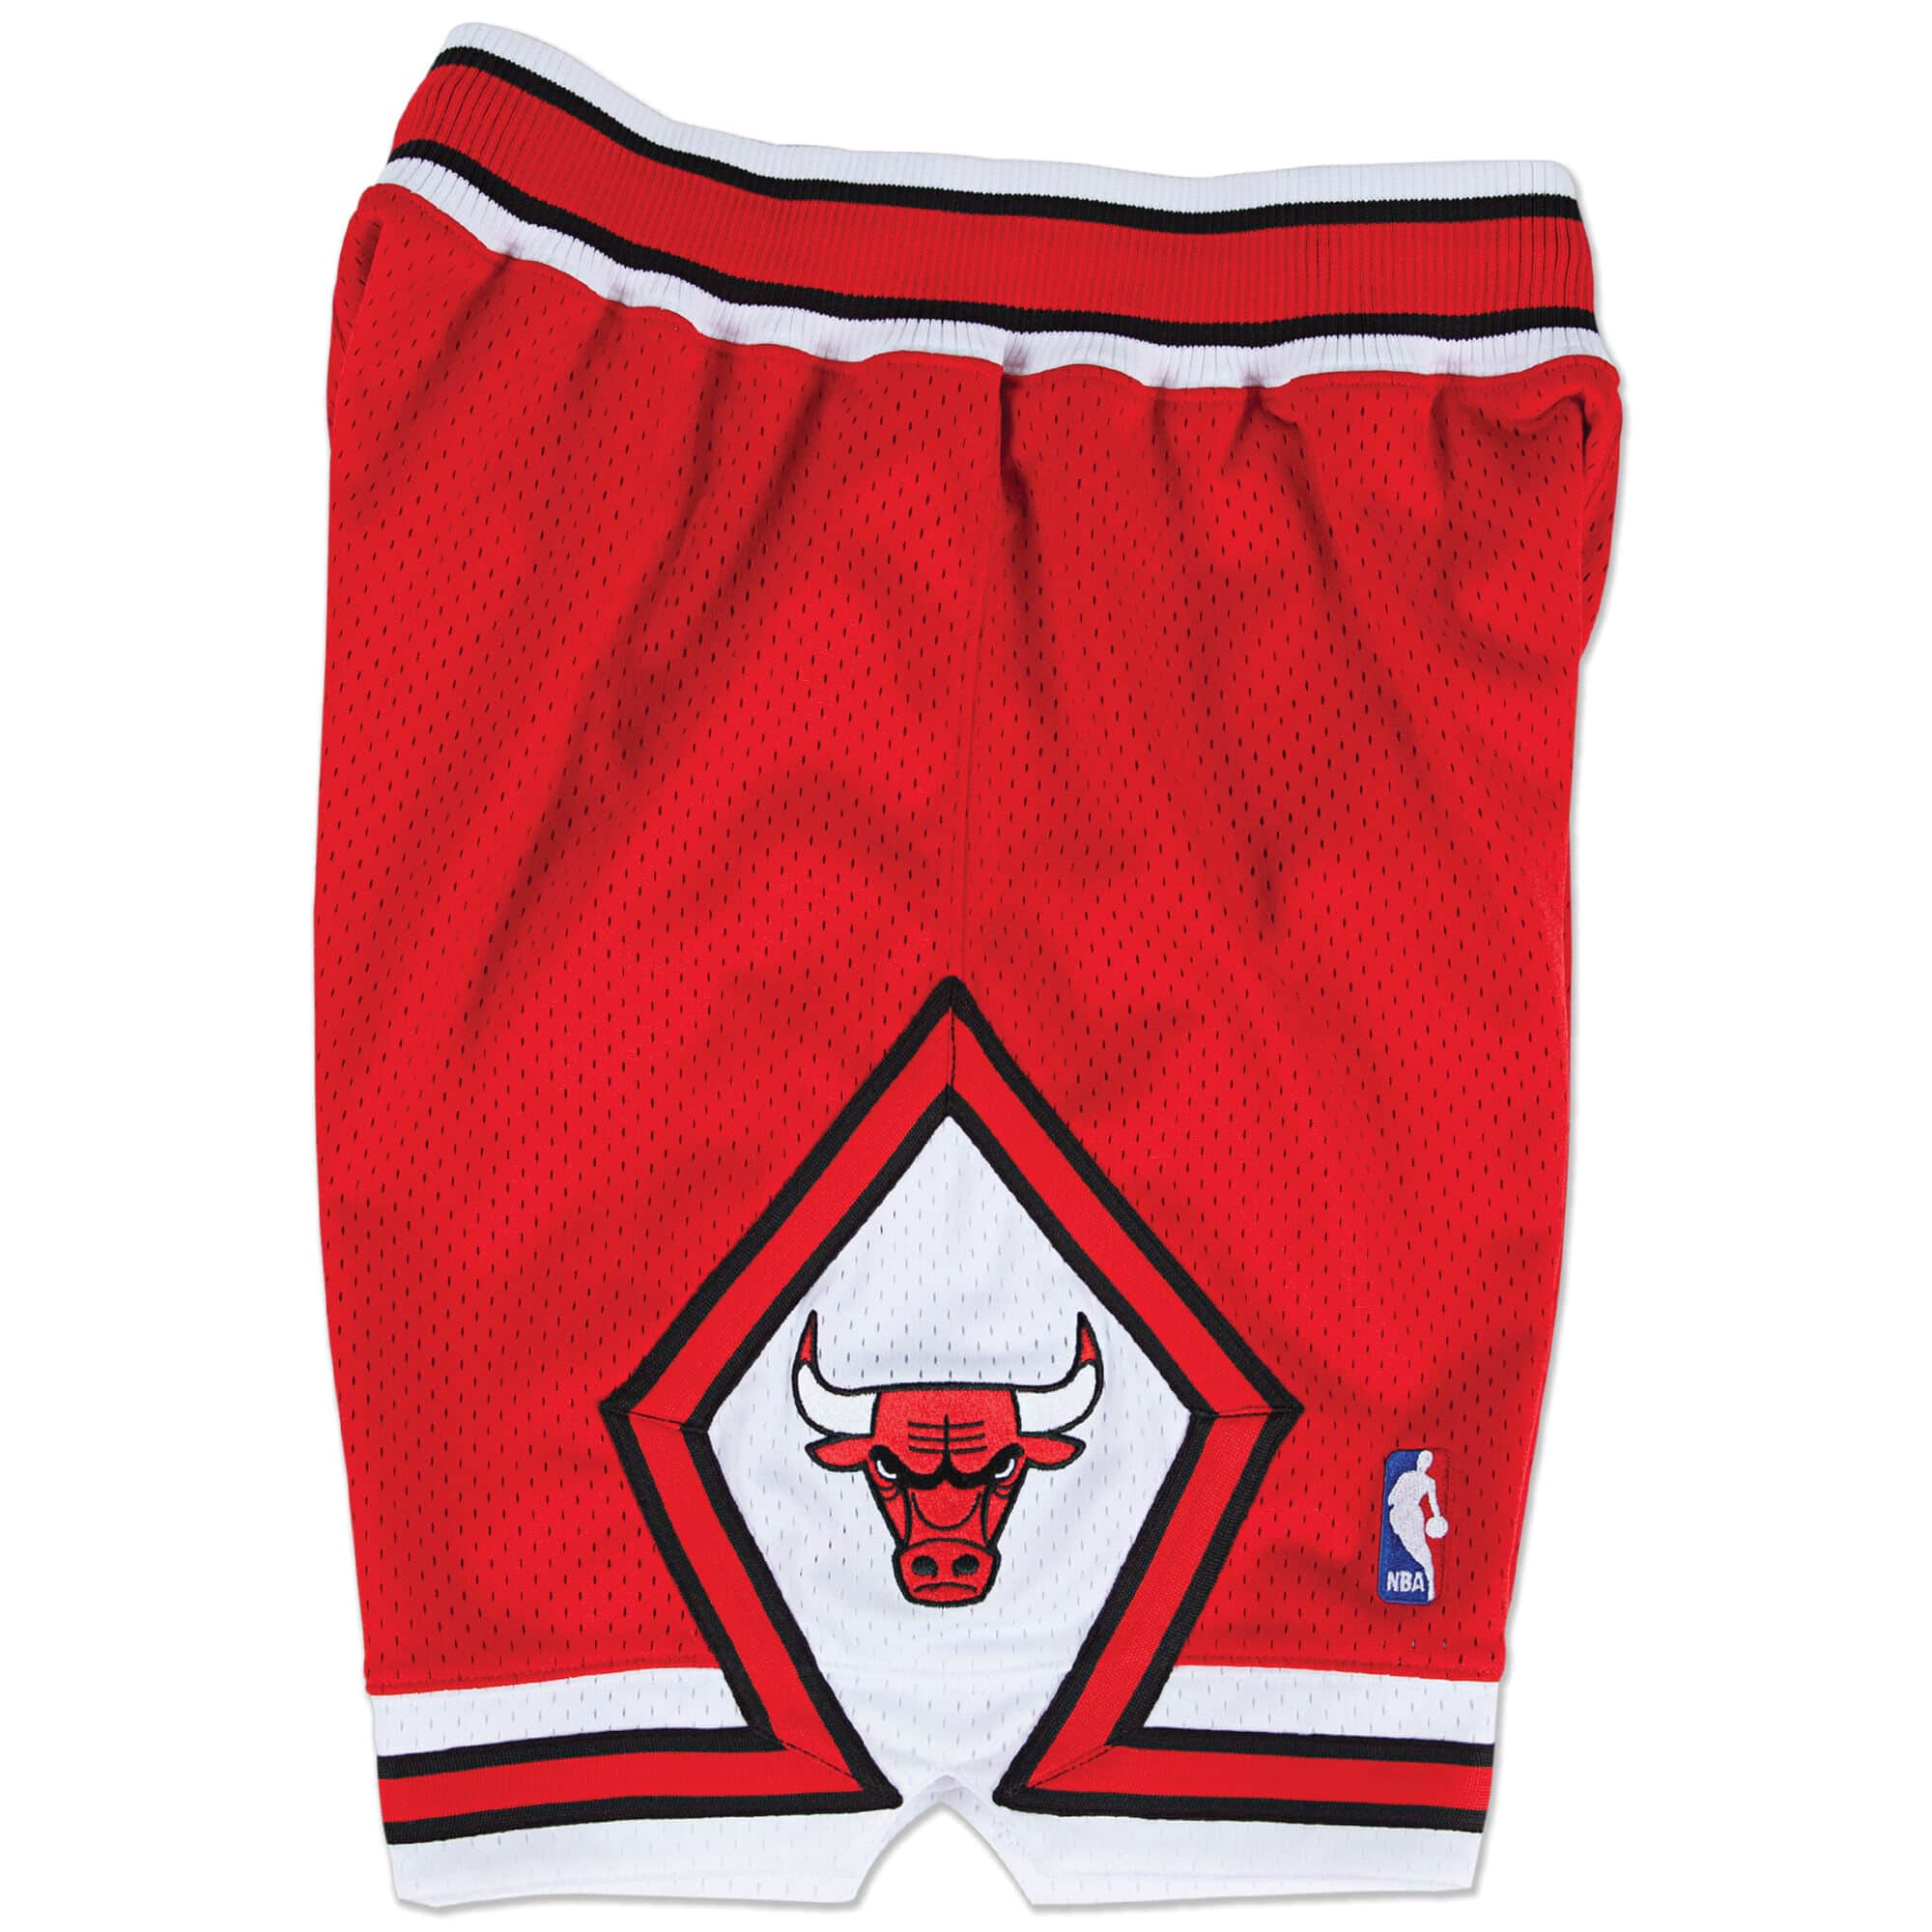 Mitchell & Ness Chicago Bulls '97-98 Jersey White - Size S